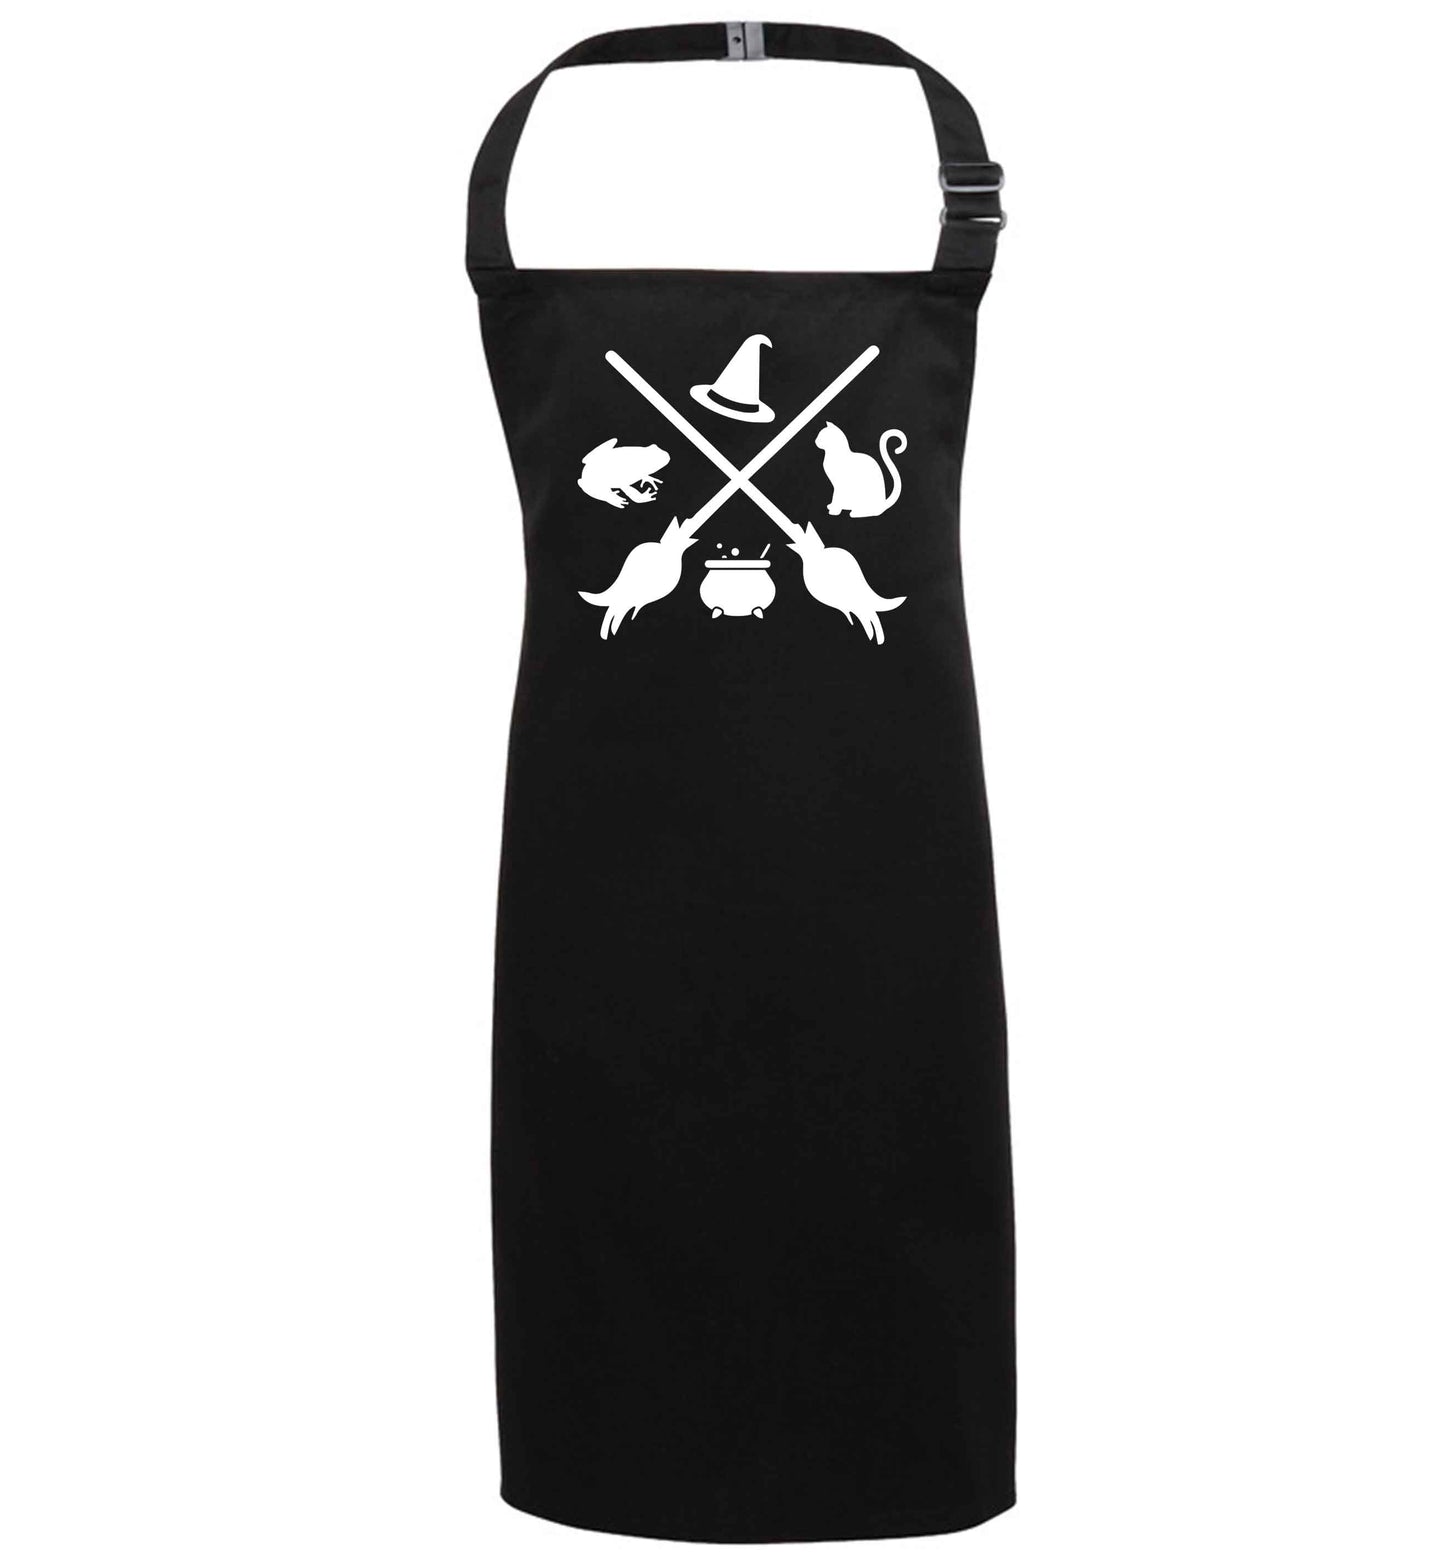 Witch symbol black apron 7-10 years